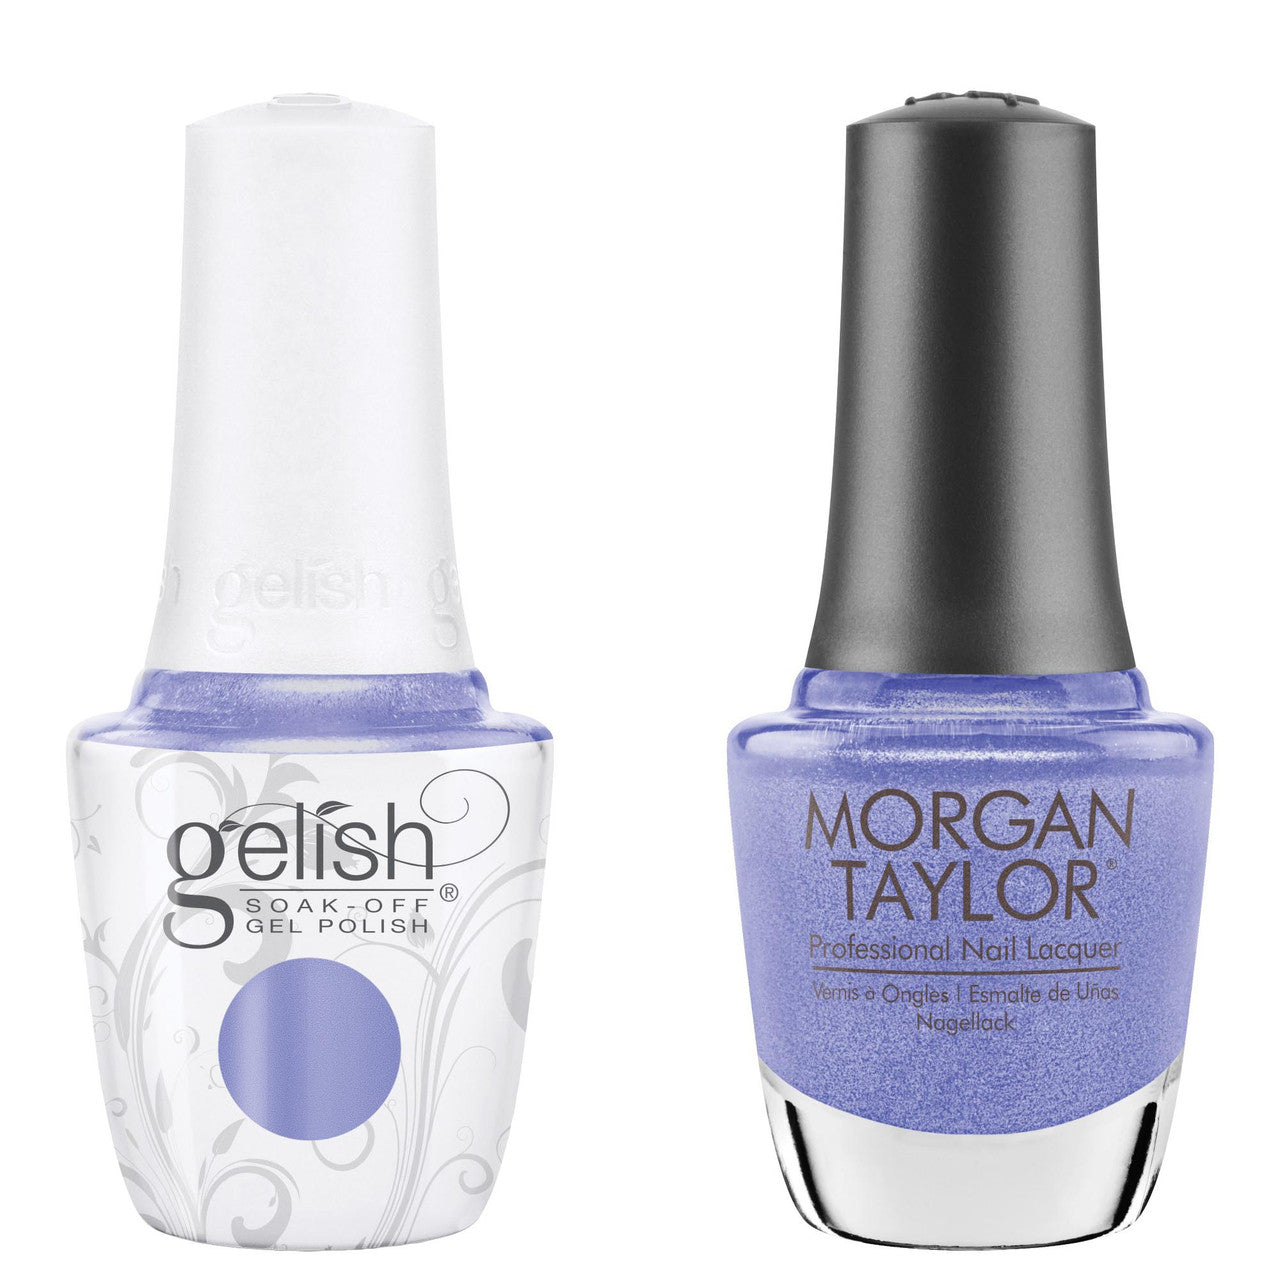 Gelish Gel Polish + Morgan Taylor Gift It Your Best #1110513 - Universal Nail Supplies